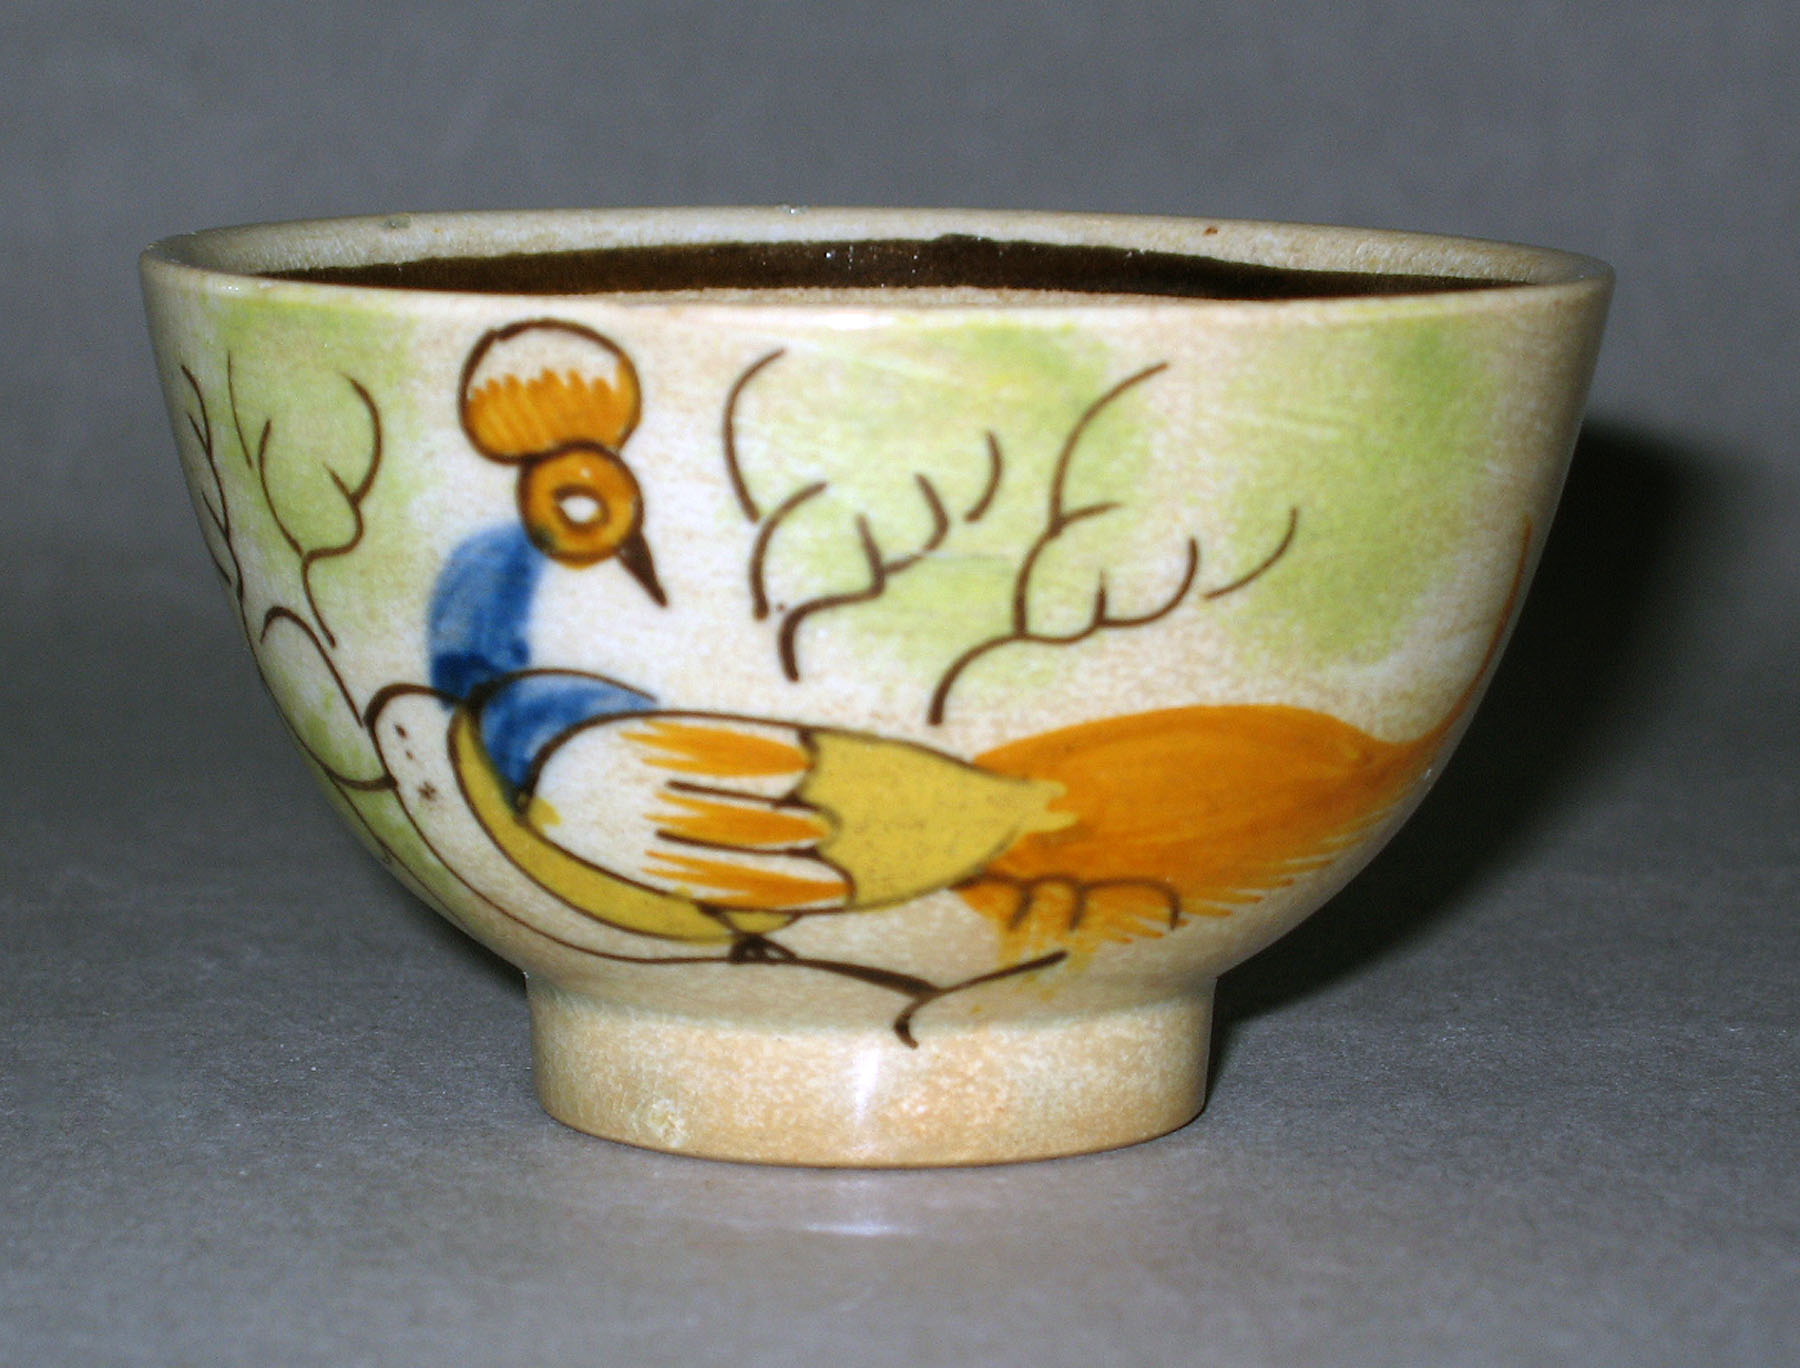 1957.0500 Pearlware teabowl